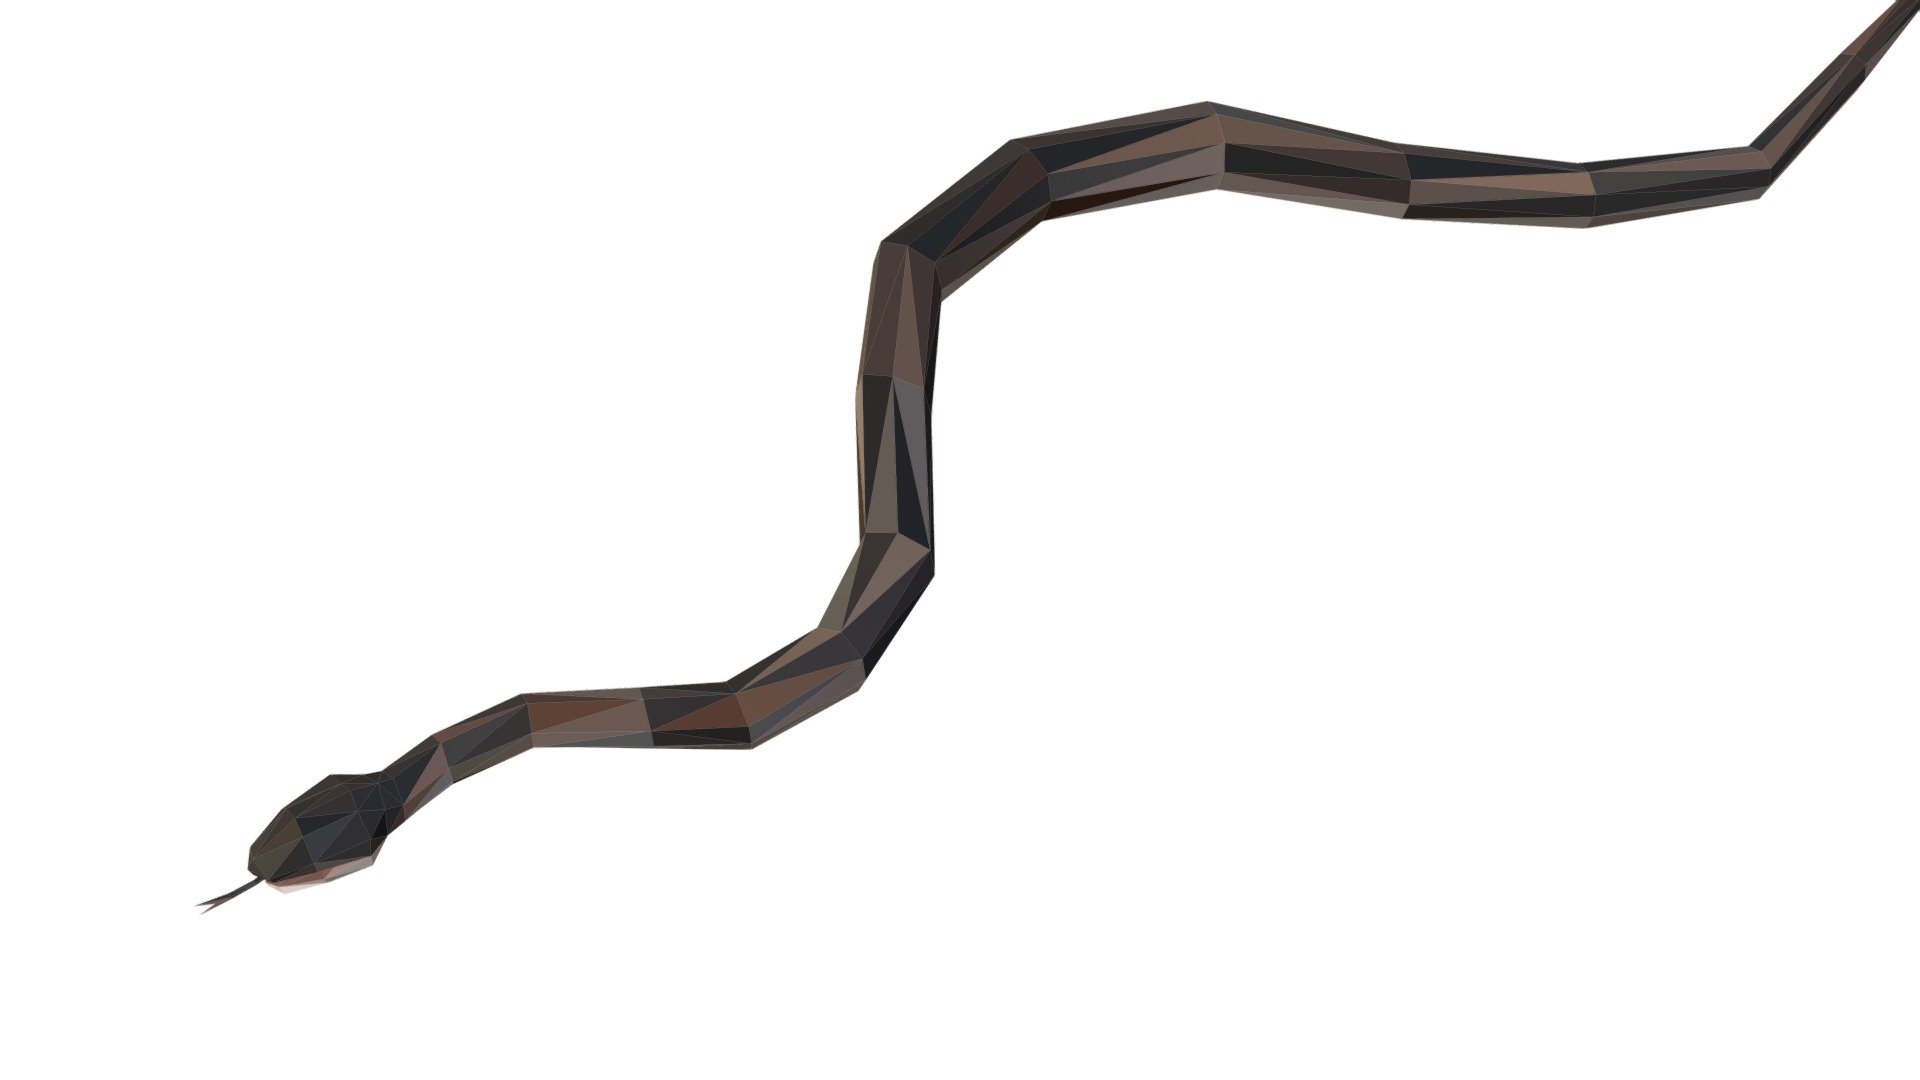 Animated Snake Lowpoly Art Style
Animation layers:
Run    0-20
Walk  20-59 - Animated Snake Lowpoly Art Style - Buy Royalty Free 3D model by Oleg Shuldiakov (@olegshuldiakov) 3d model